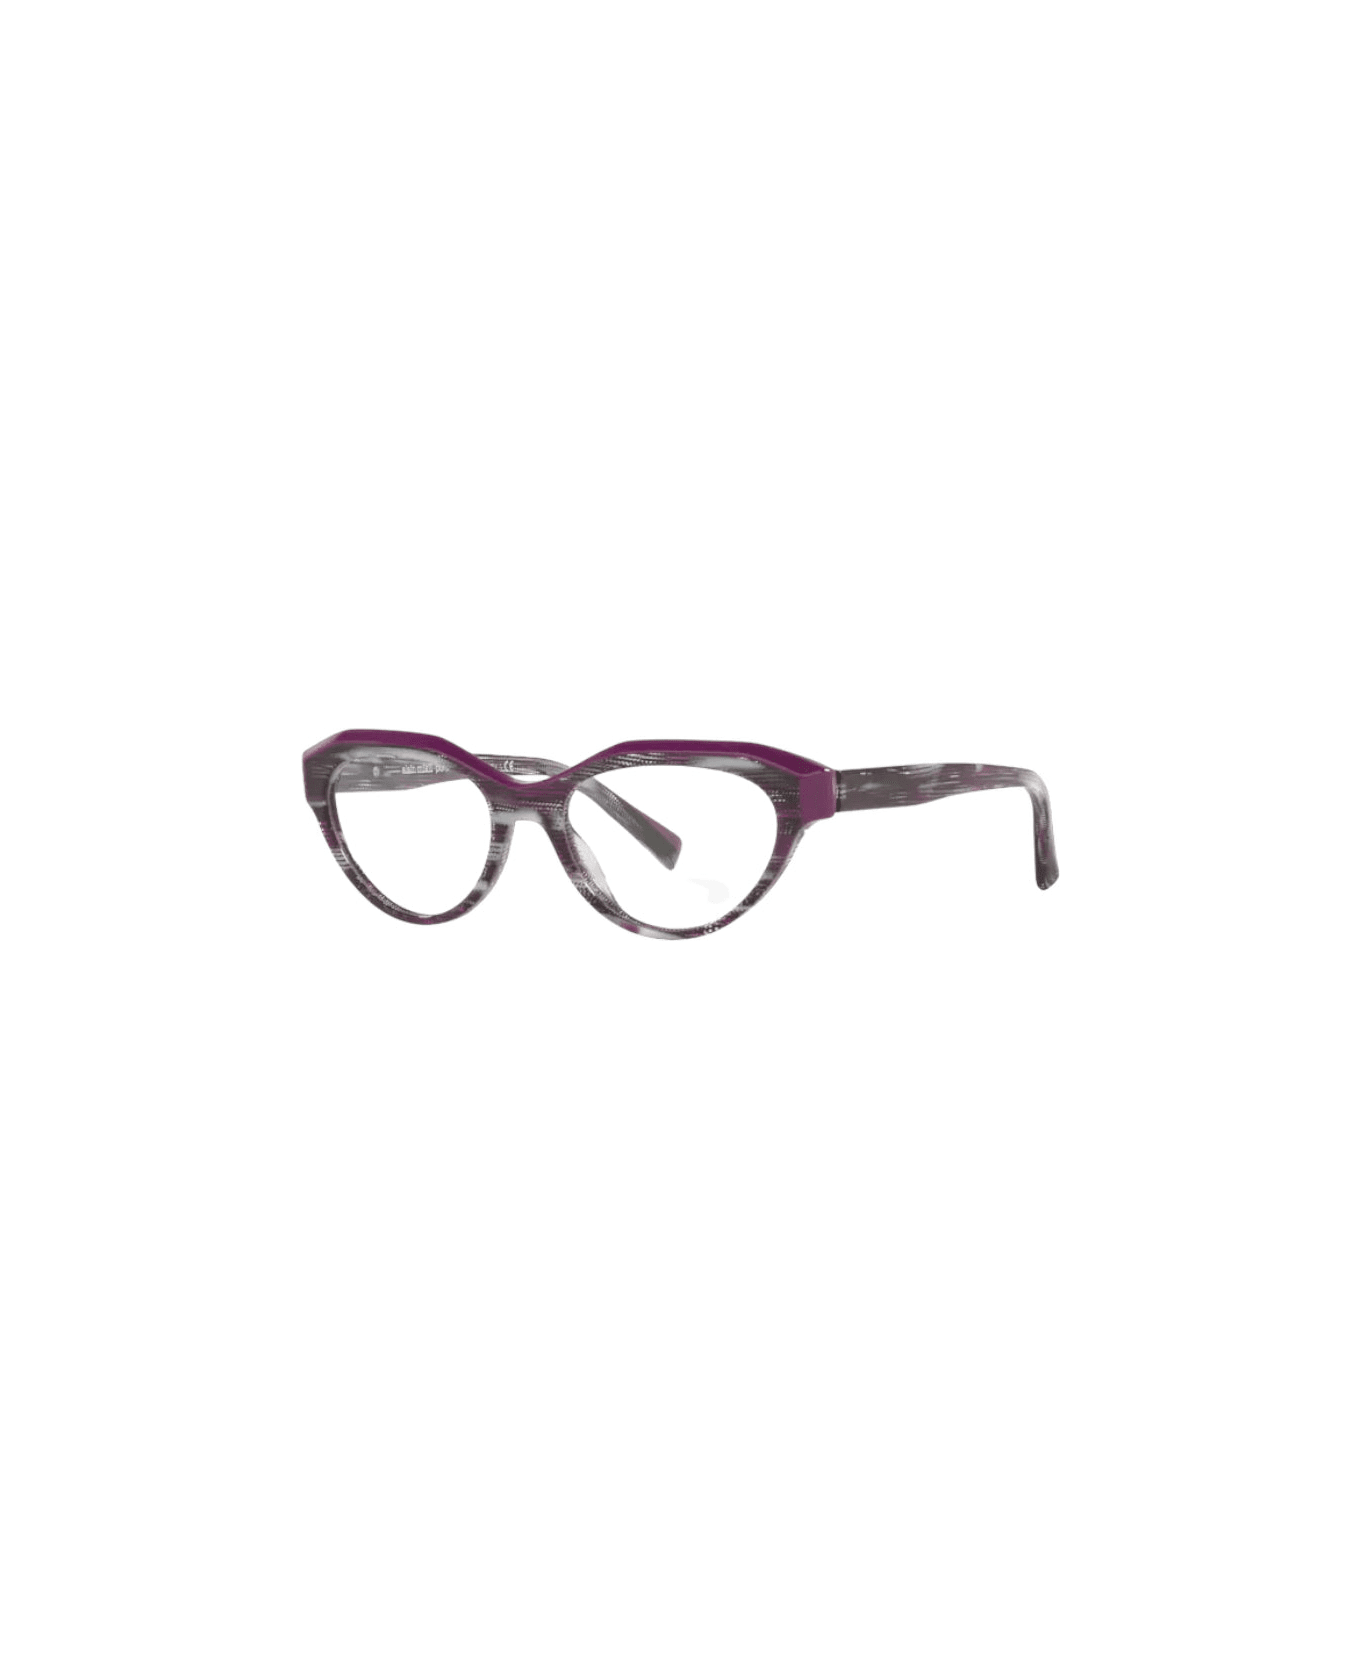 Alain Mikli A03098 - Black / Purple Glasses